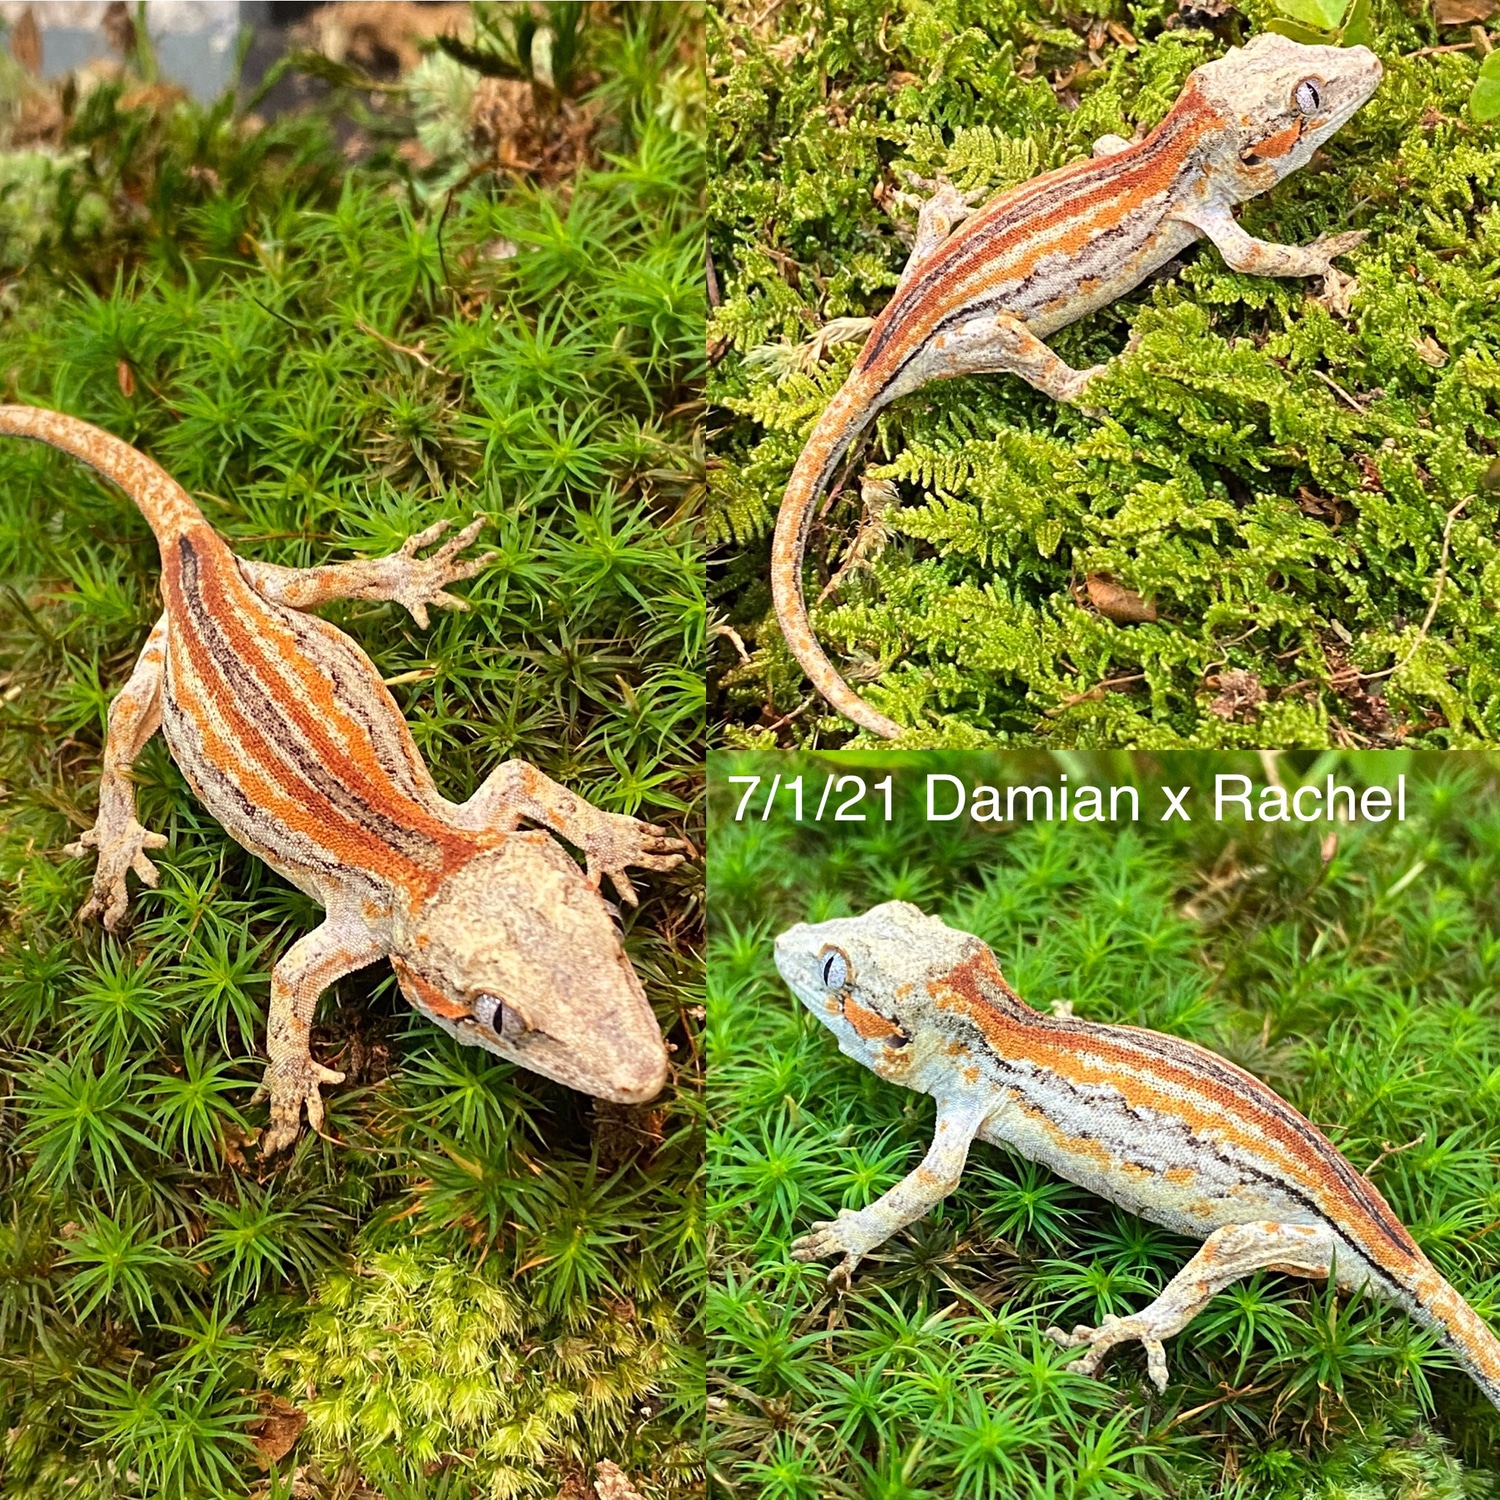 Red And Orange Stripe Damian X Rachel (Phantom Eye) Gargoyle Gecko by Nature Nut Reptiles